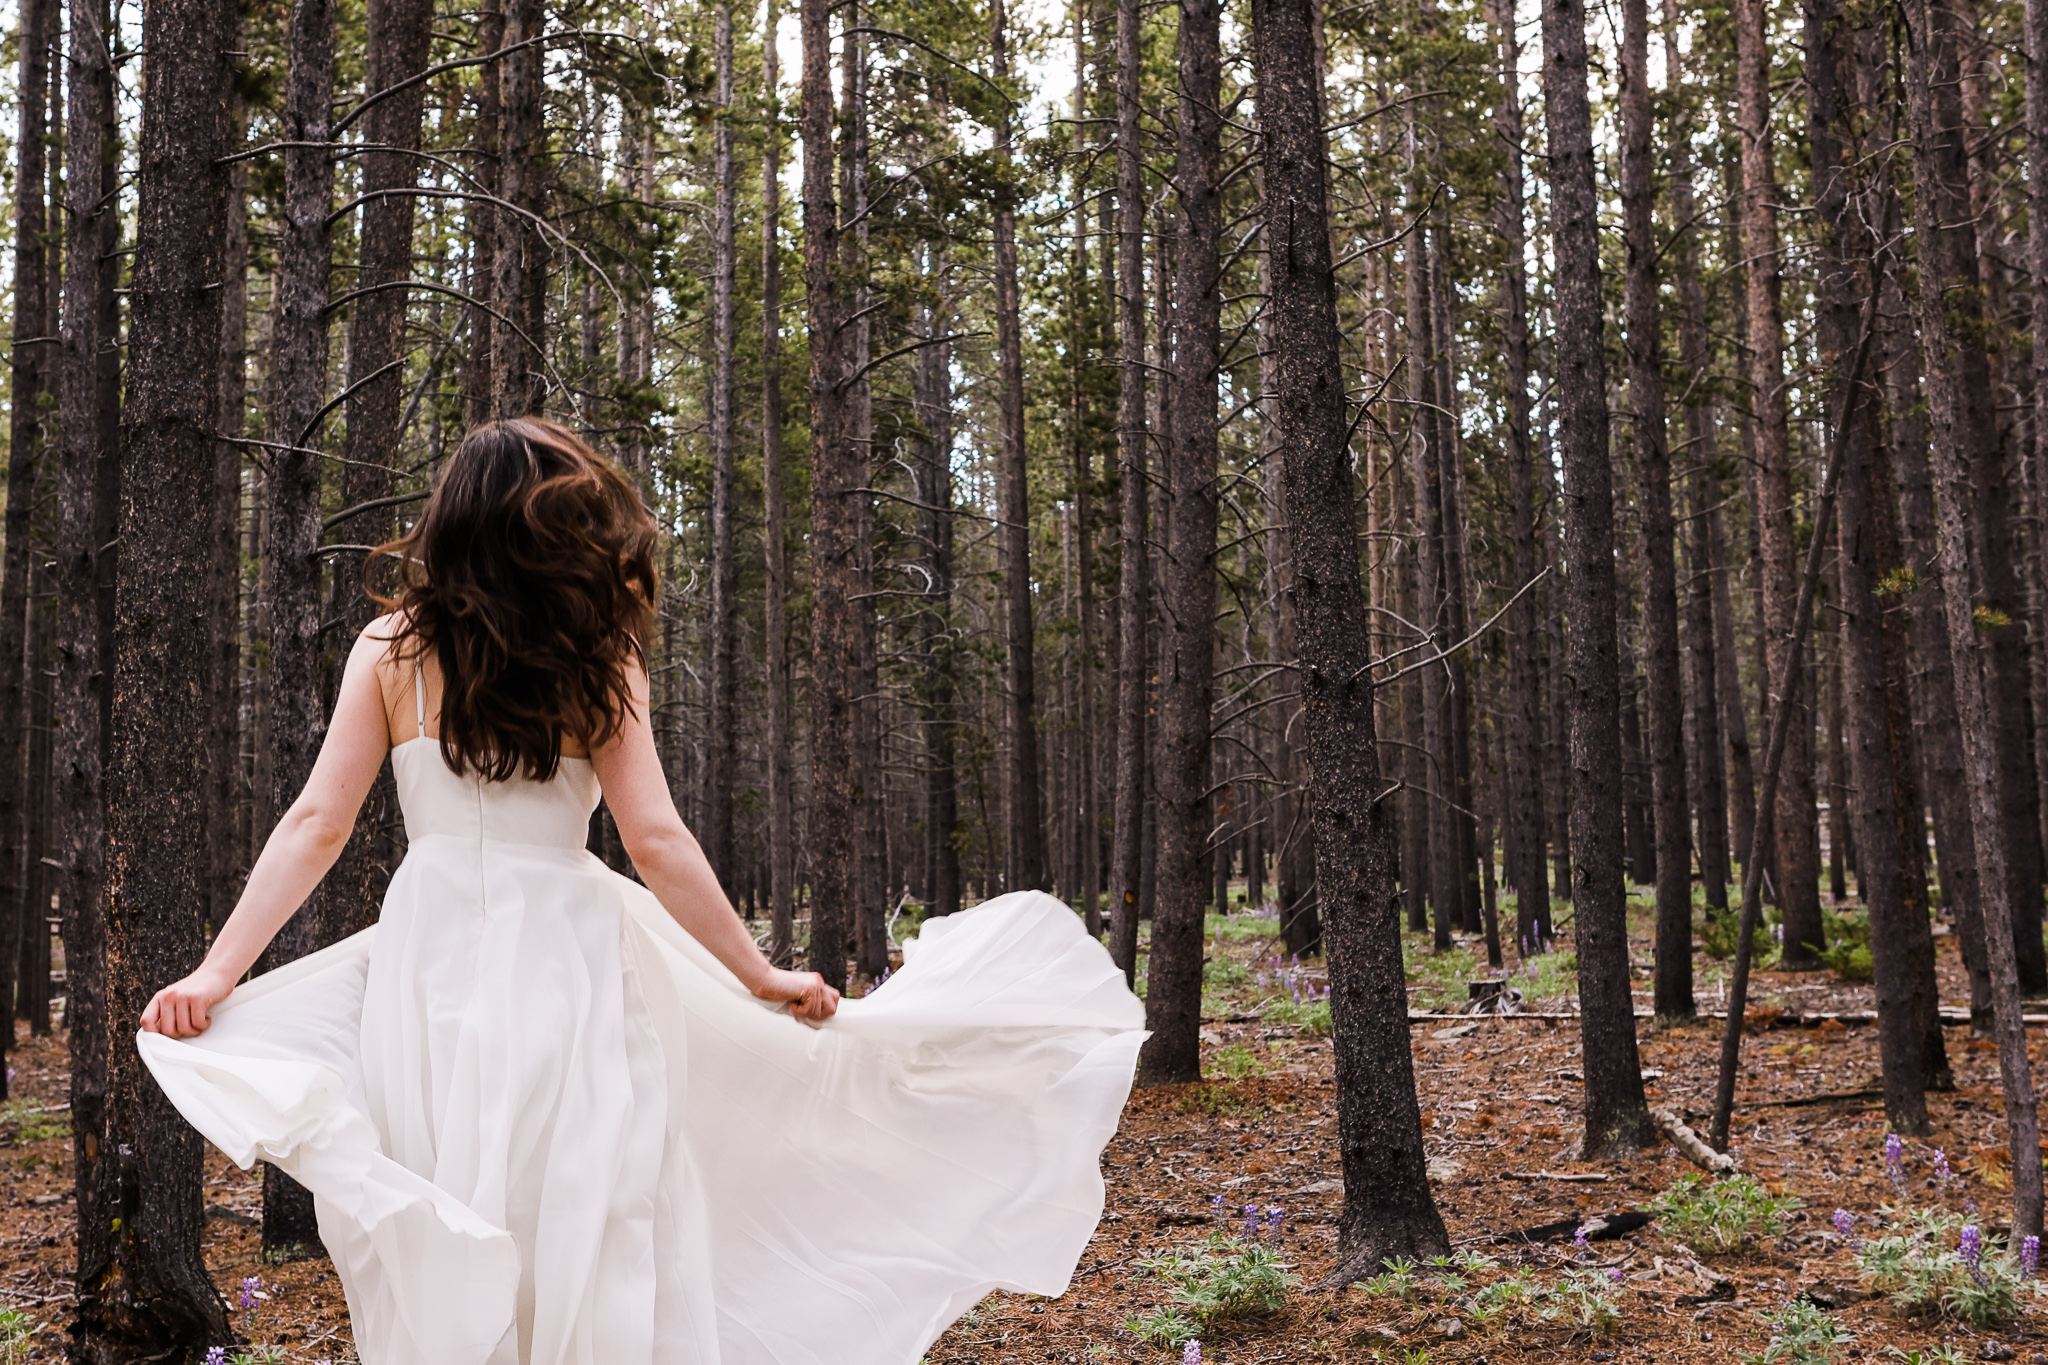 A woman runs through a pine forest in Bighorn National Forest wearing wedding dress.